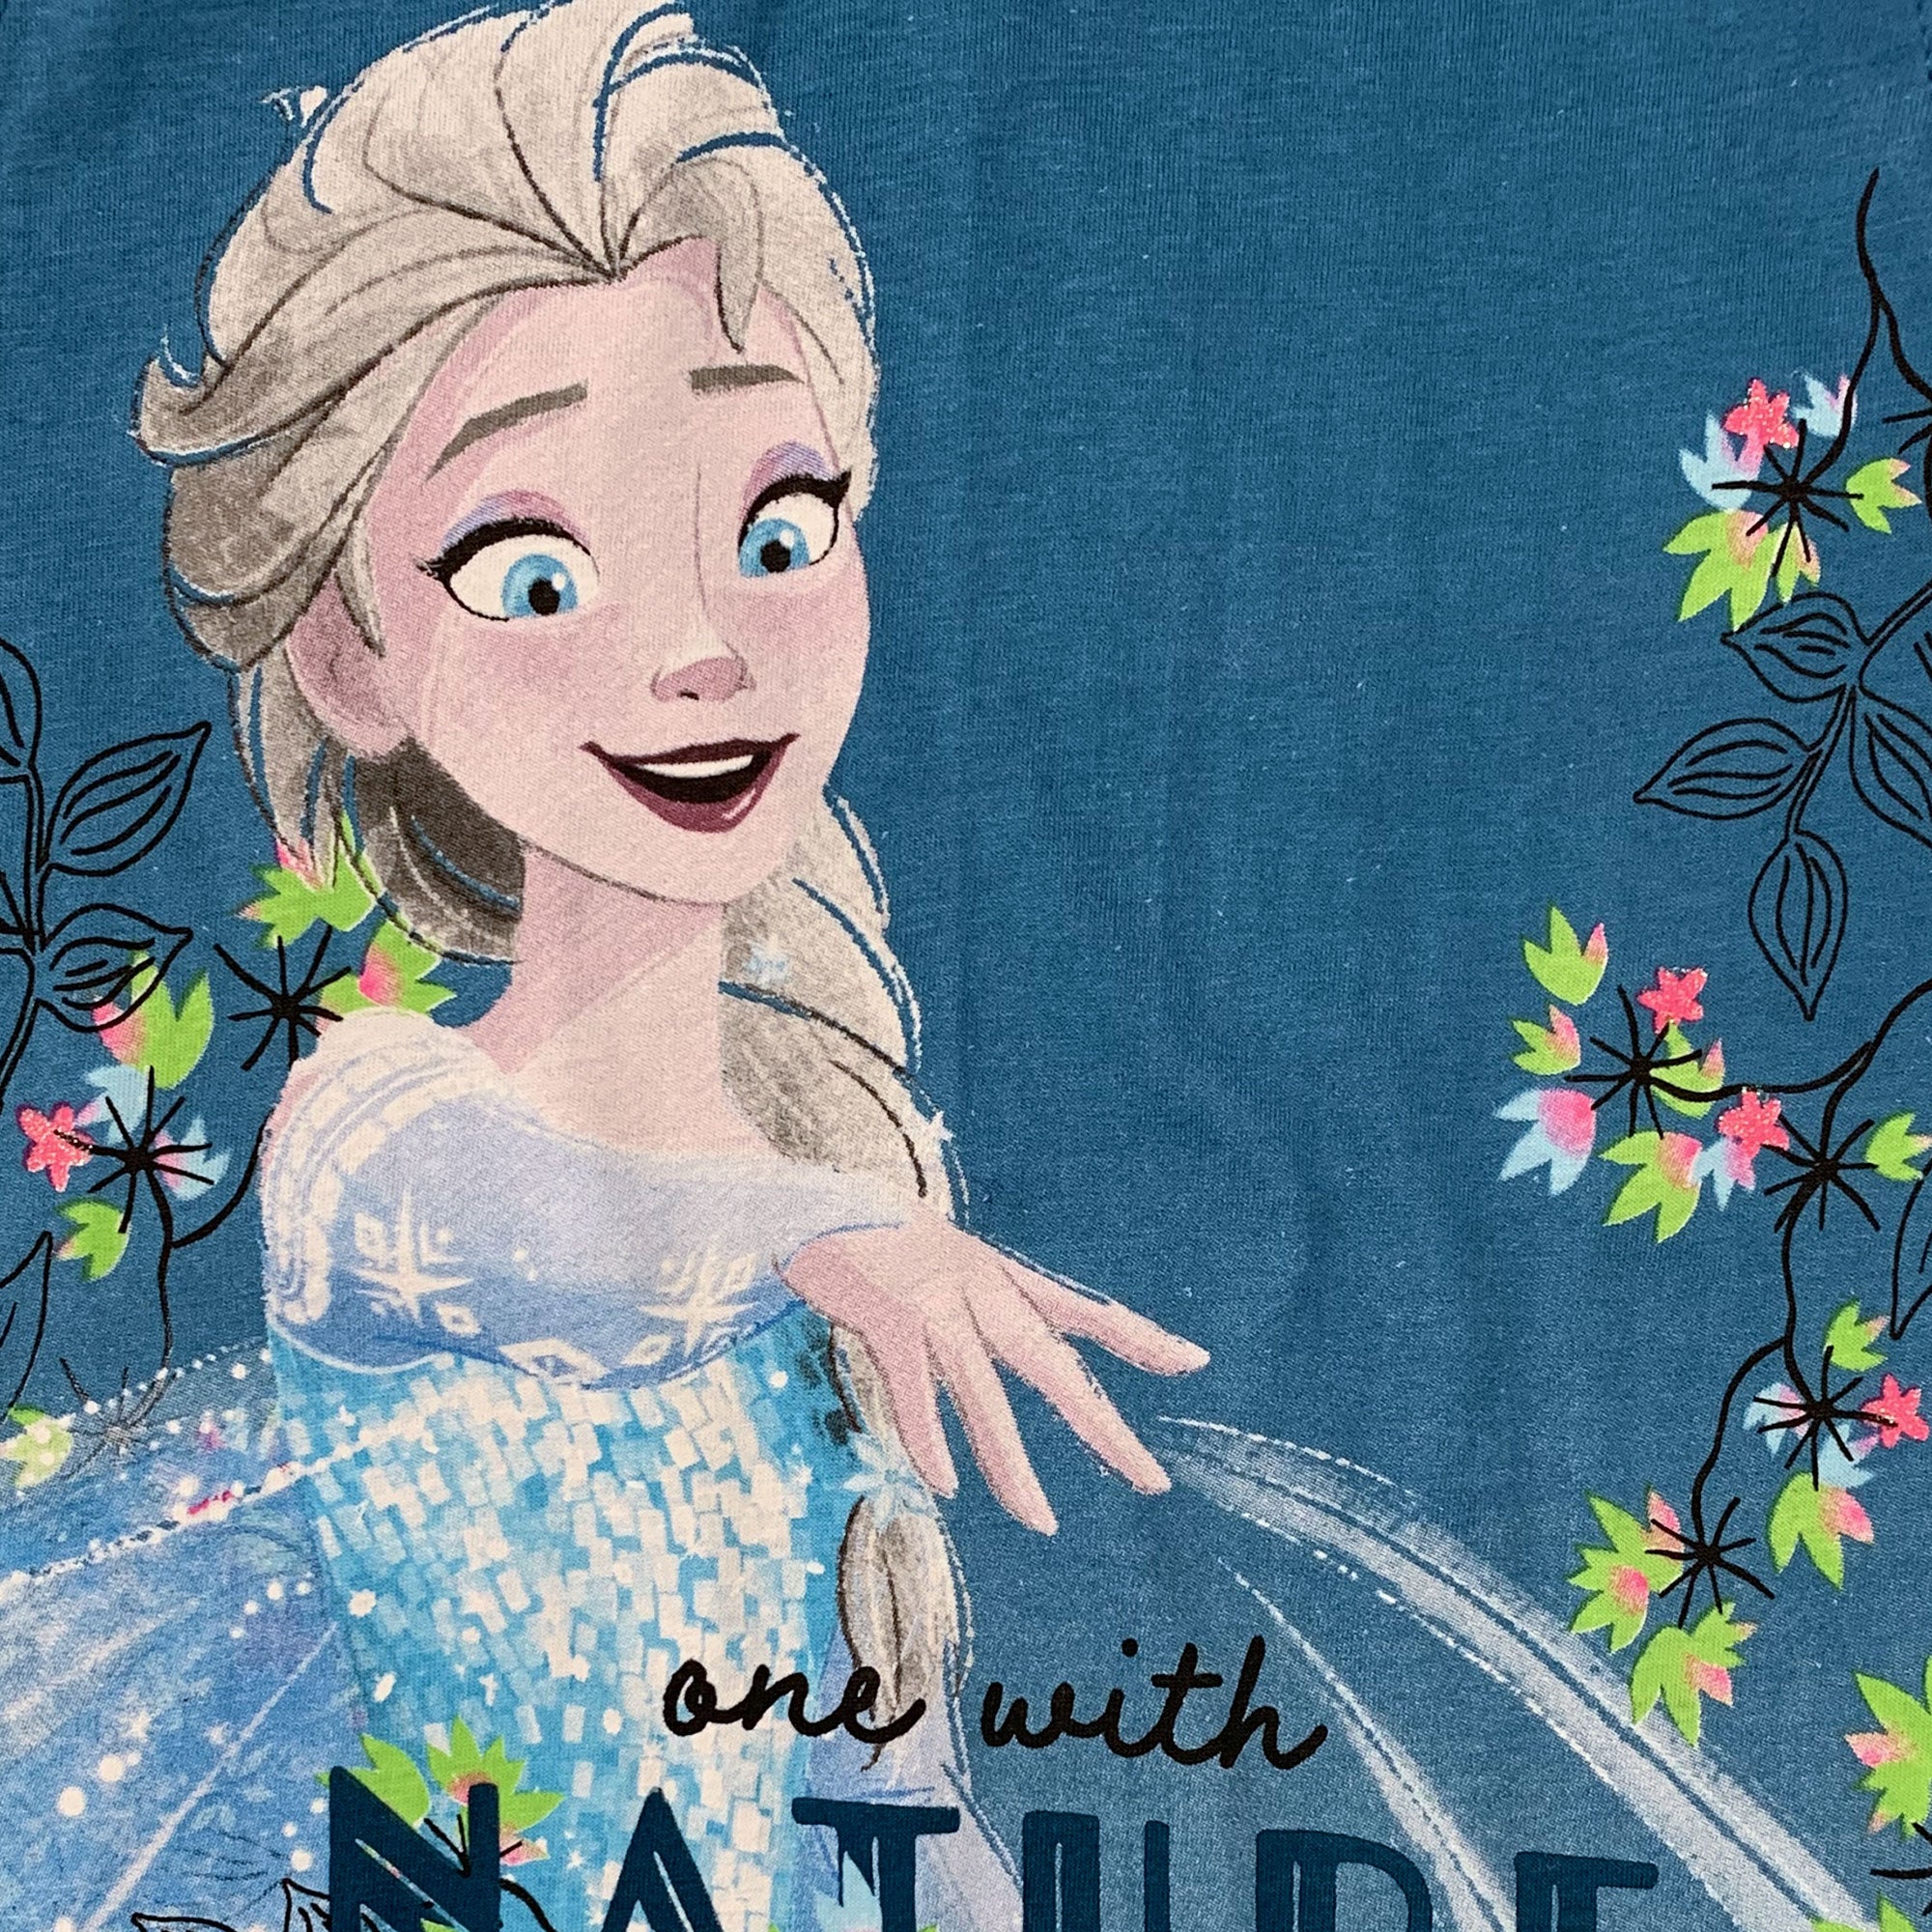 Camicia da notte bambina Disney Frozen Elsa canotta con rouches in cotone 6080